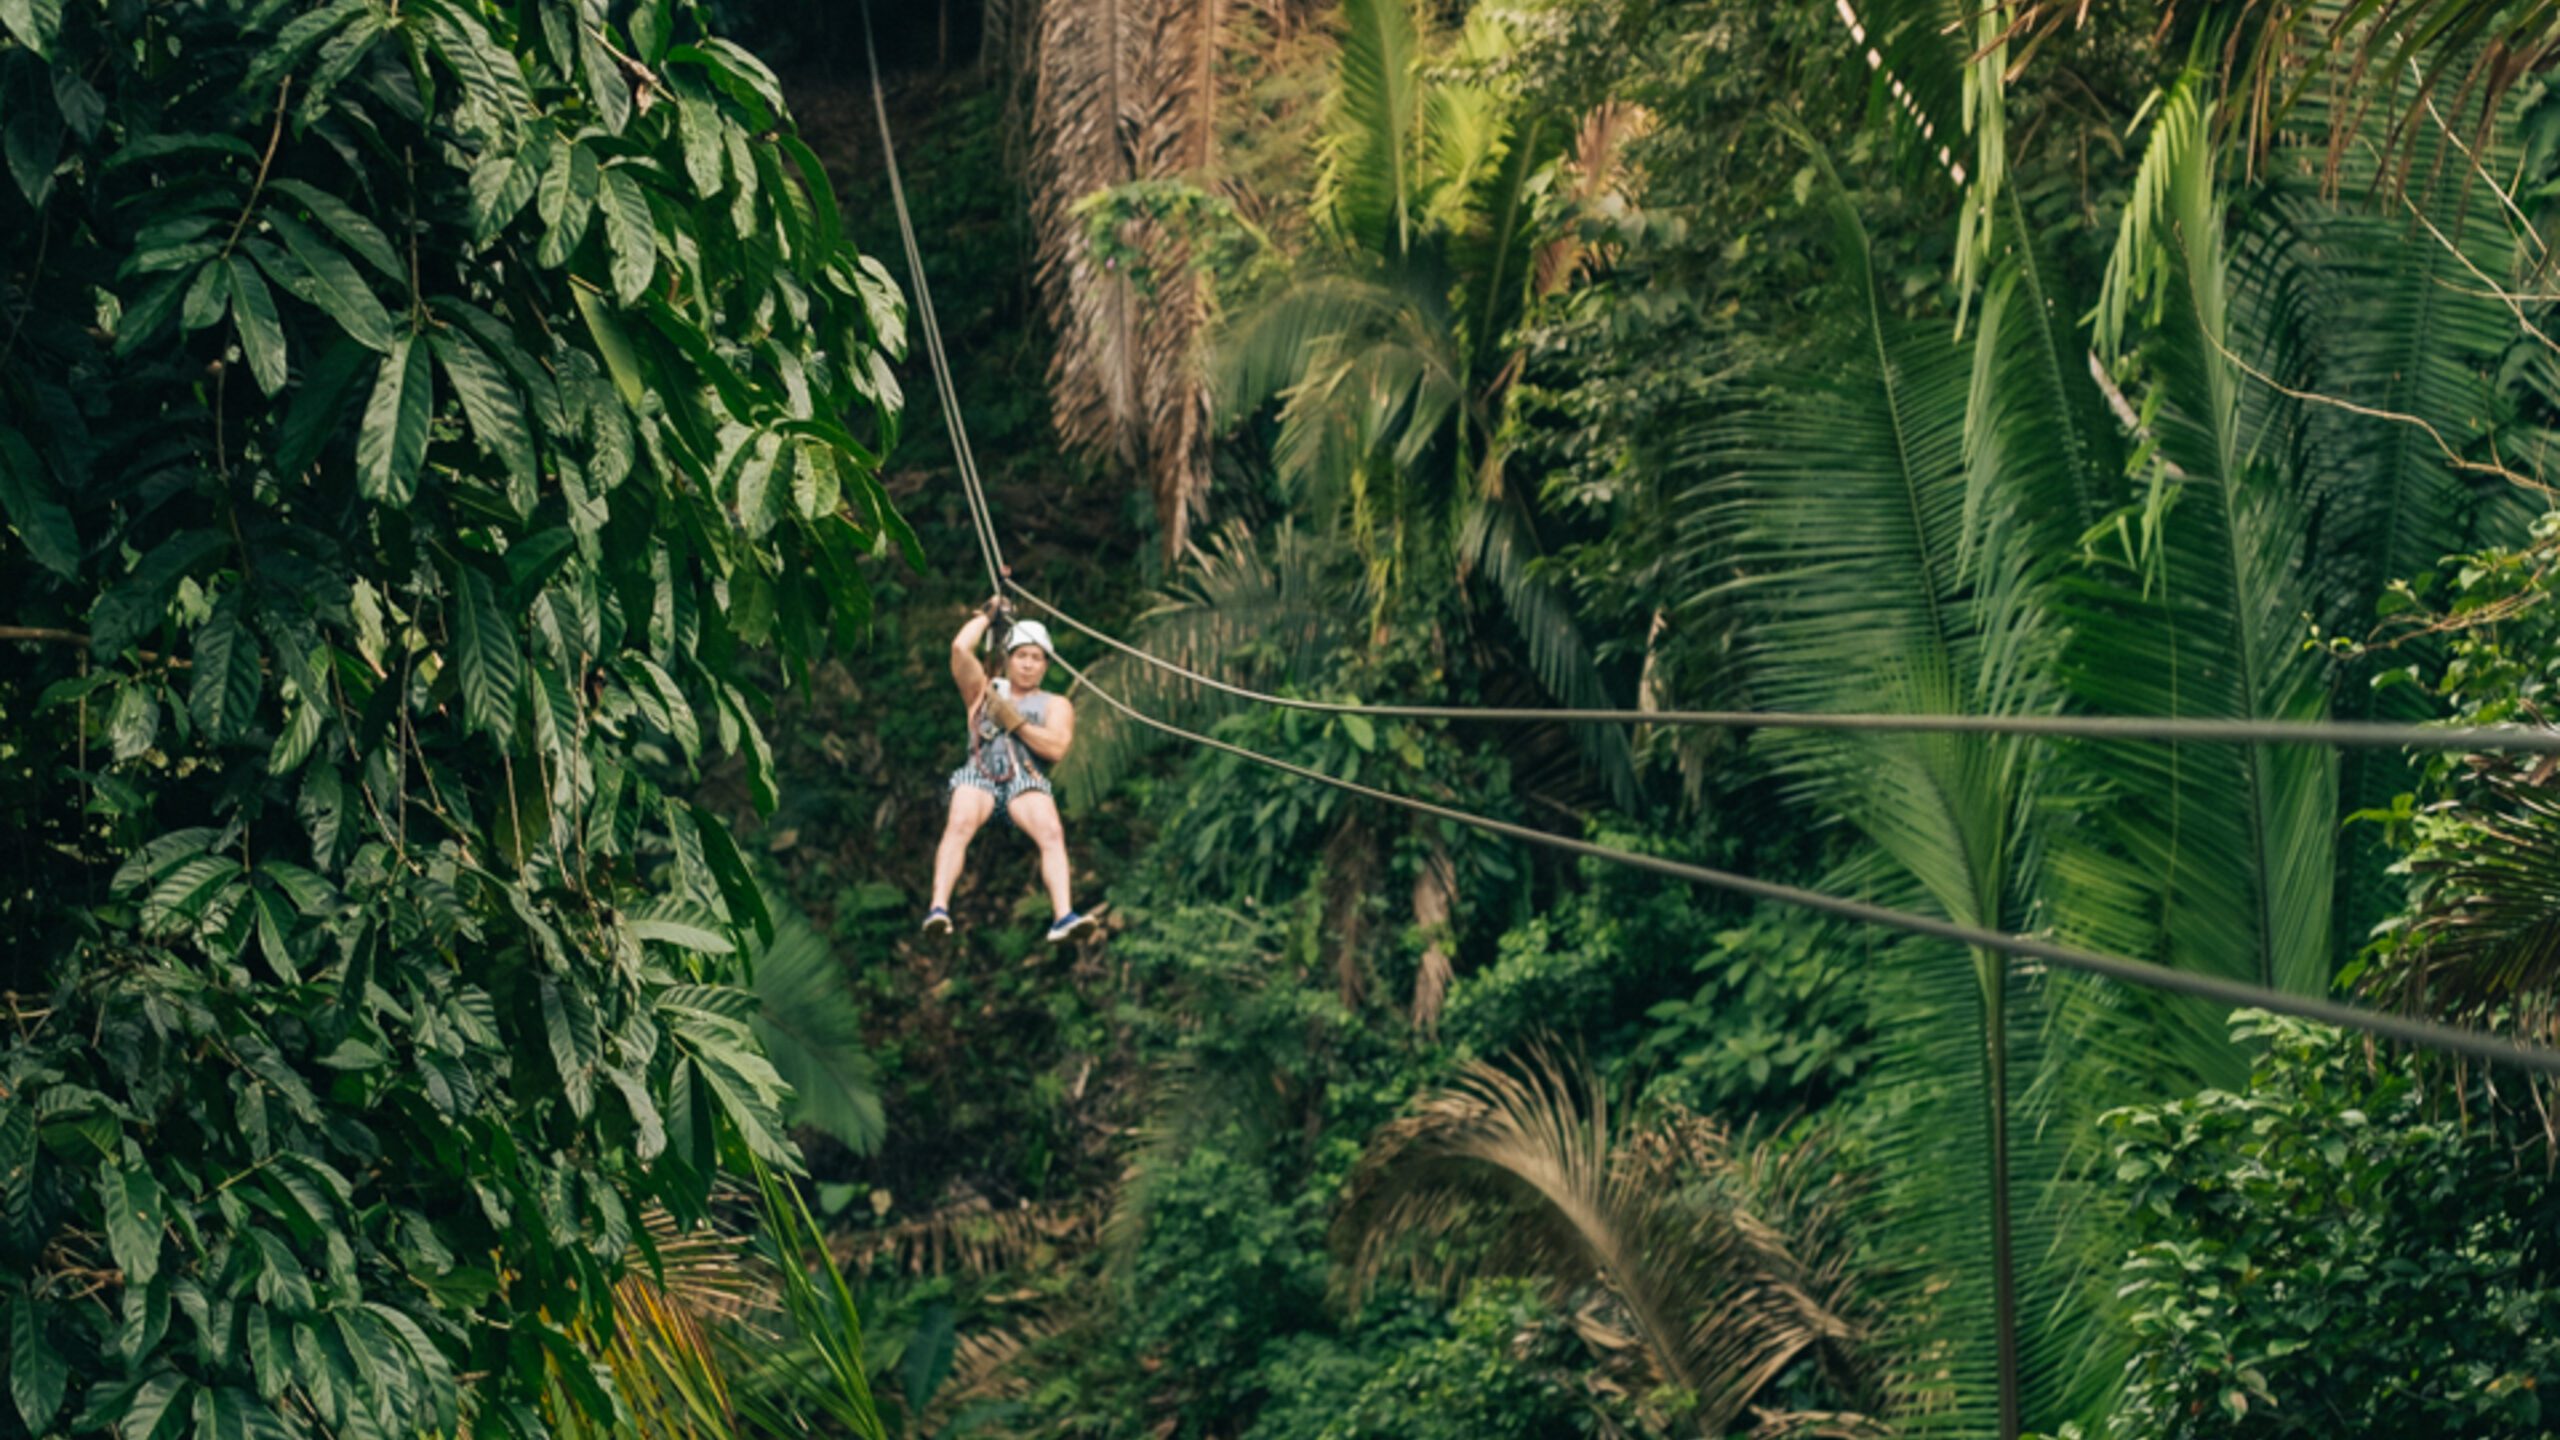 Ziplining in Belize with Island Expeditions. Longest zipline in Belize. Discount code for Island Expeditions